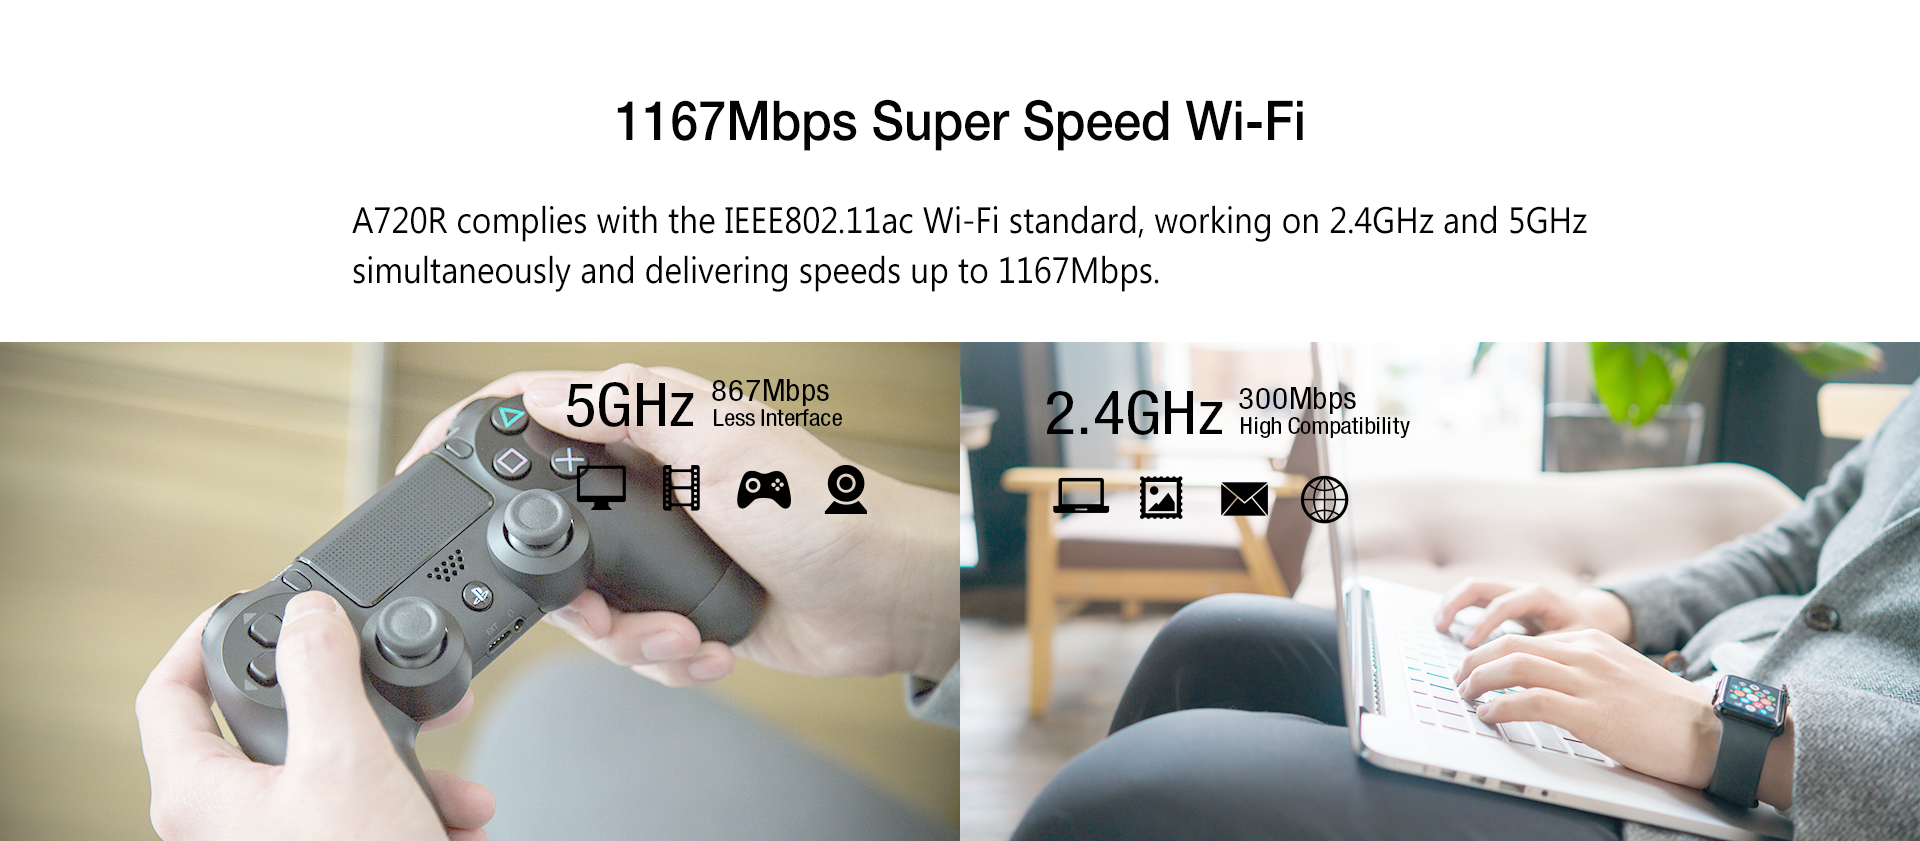 1167Mbps Gigabit Super Speed Wi-Fi